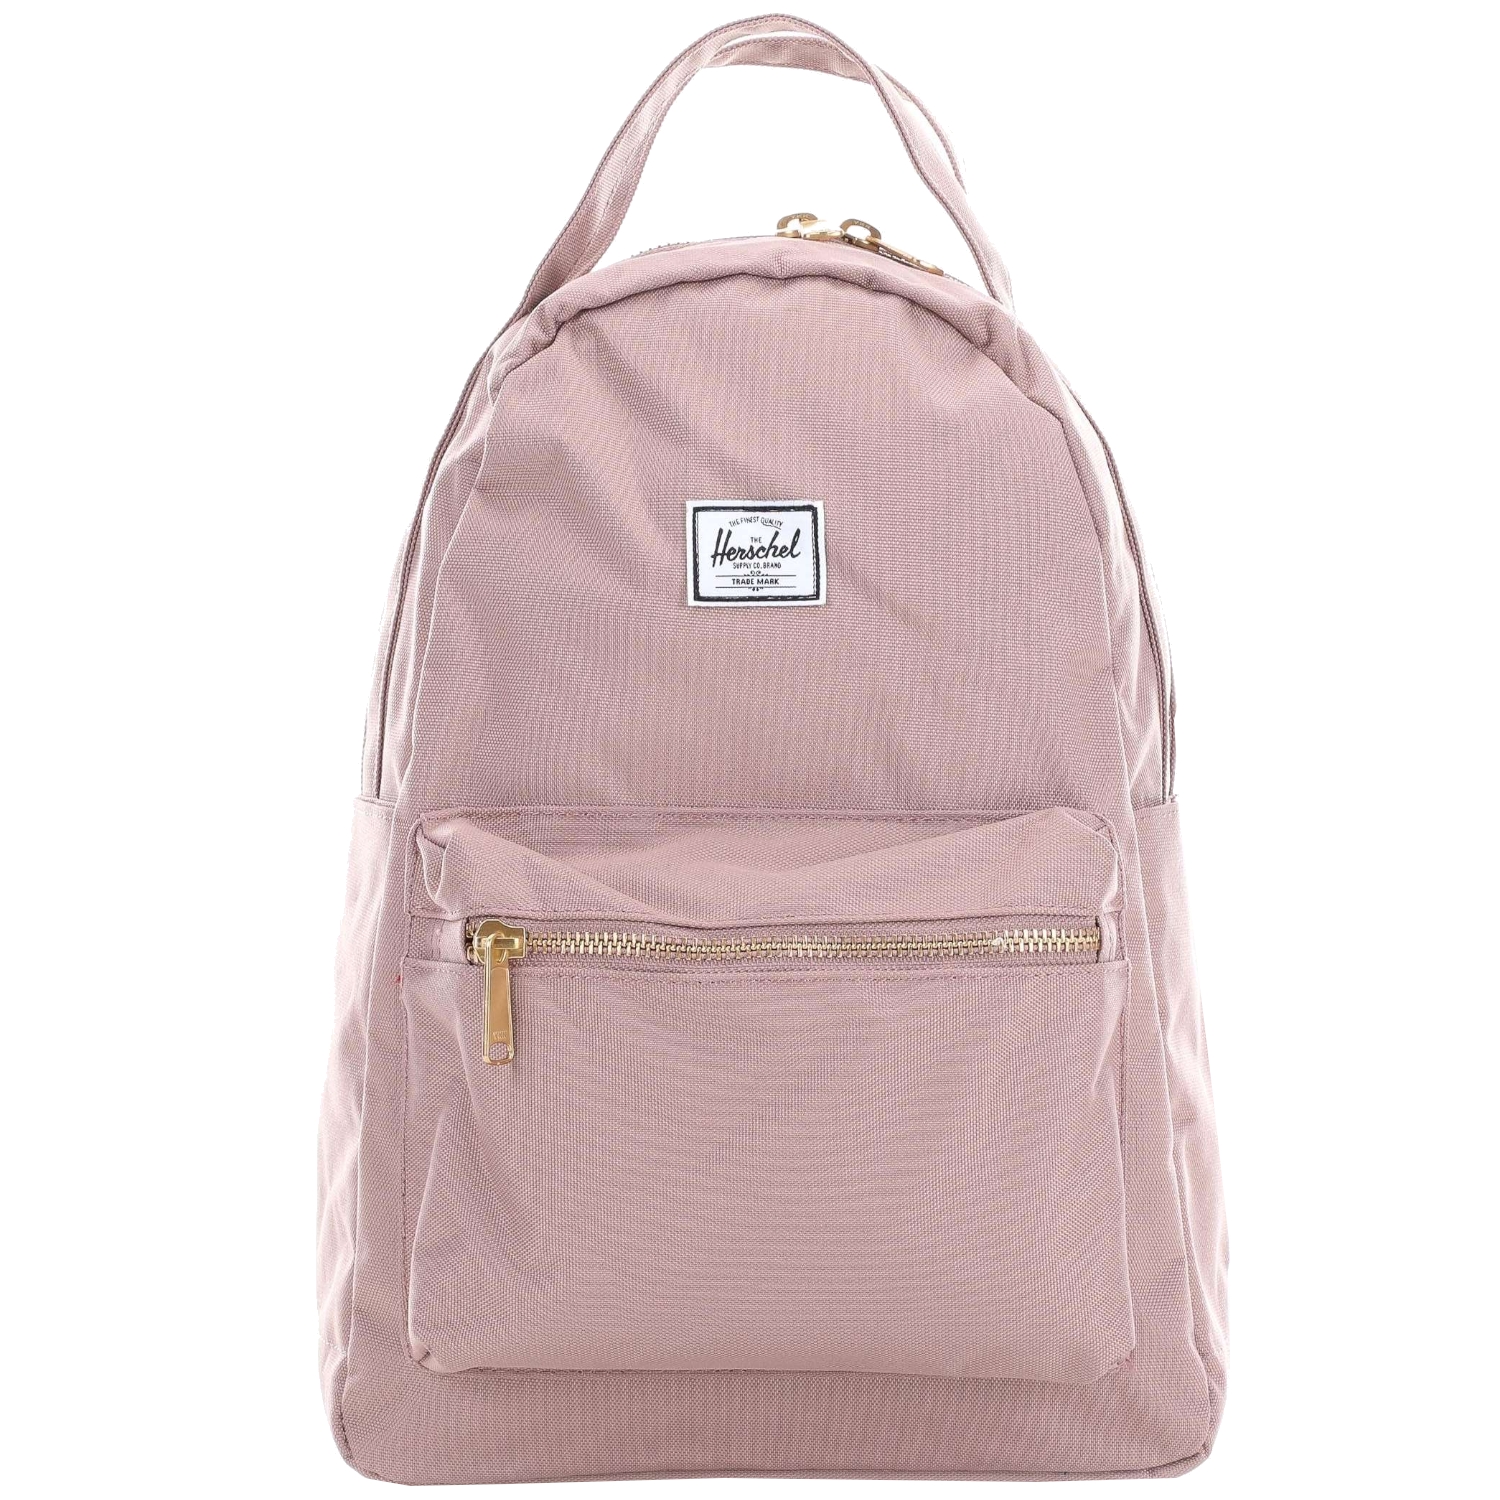 Рюкзак Herschel Herschel Nova Small Backpack, розовый